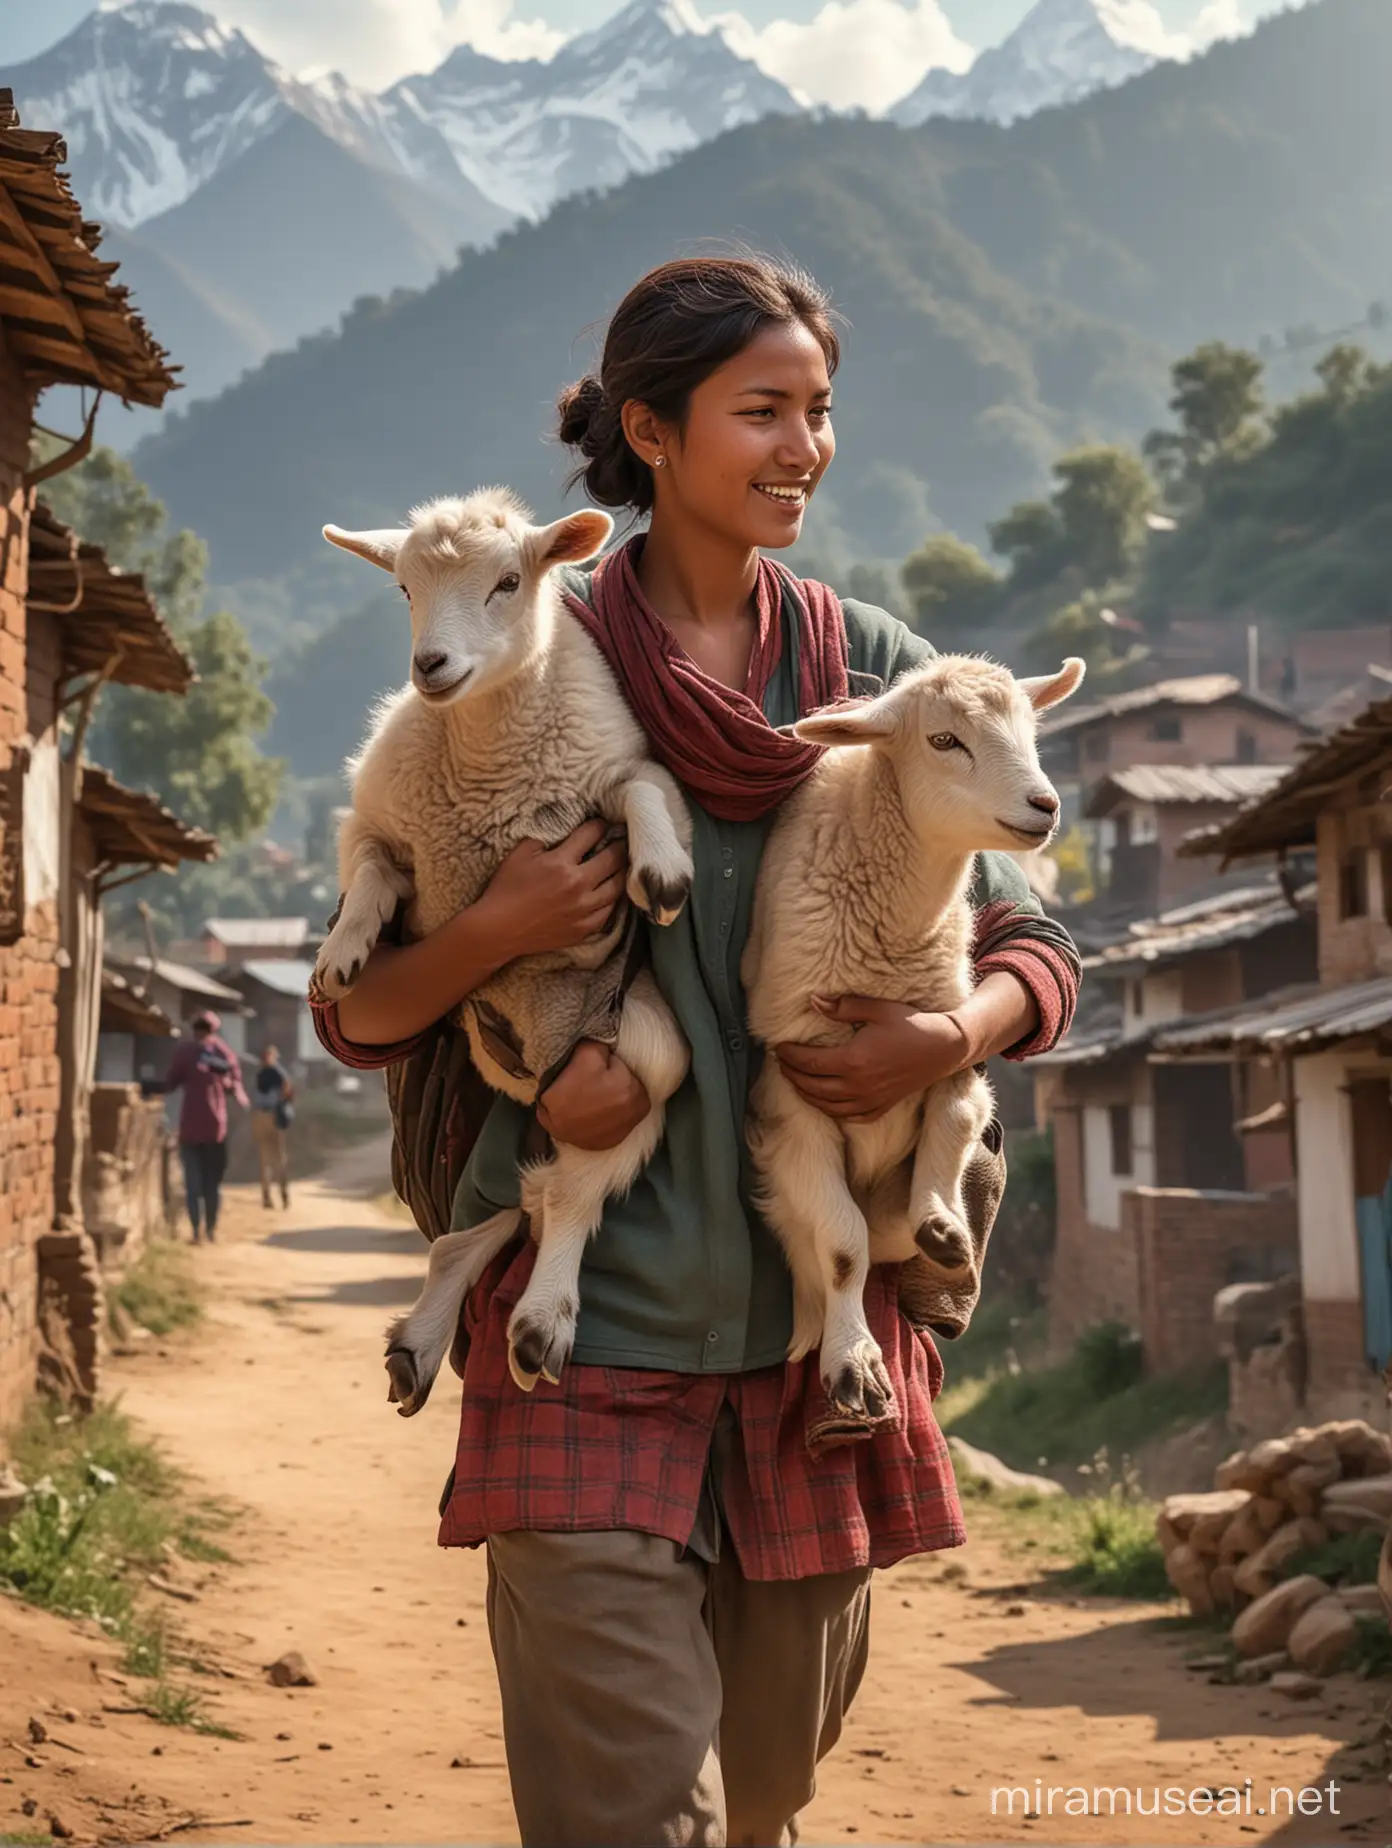 Beautiful Nepali Mountain Village Couple Carrying Baby Goat and Radio